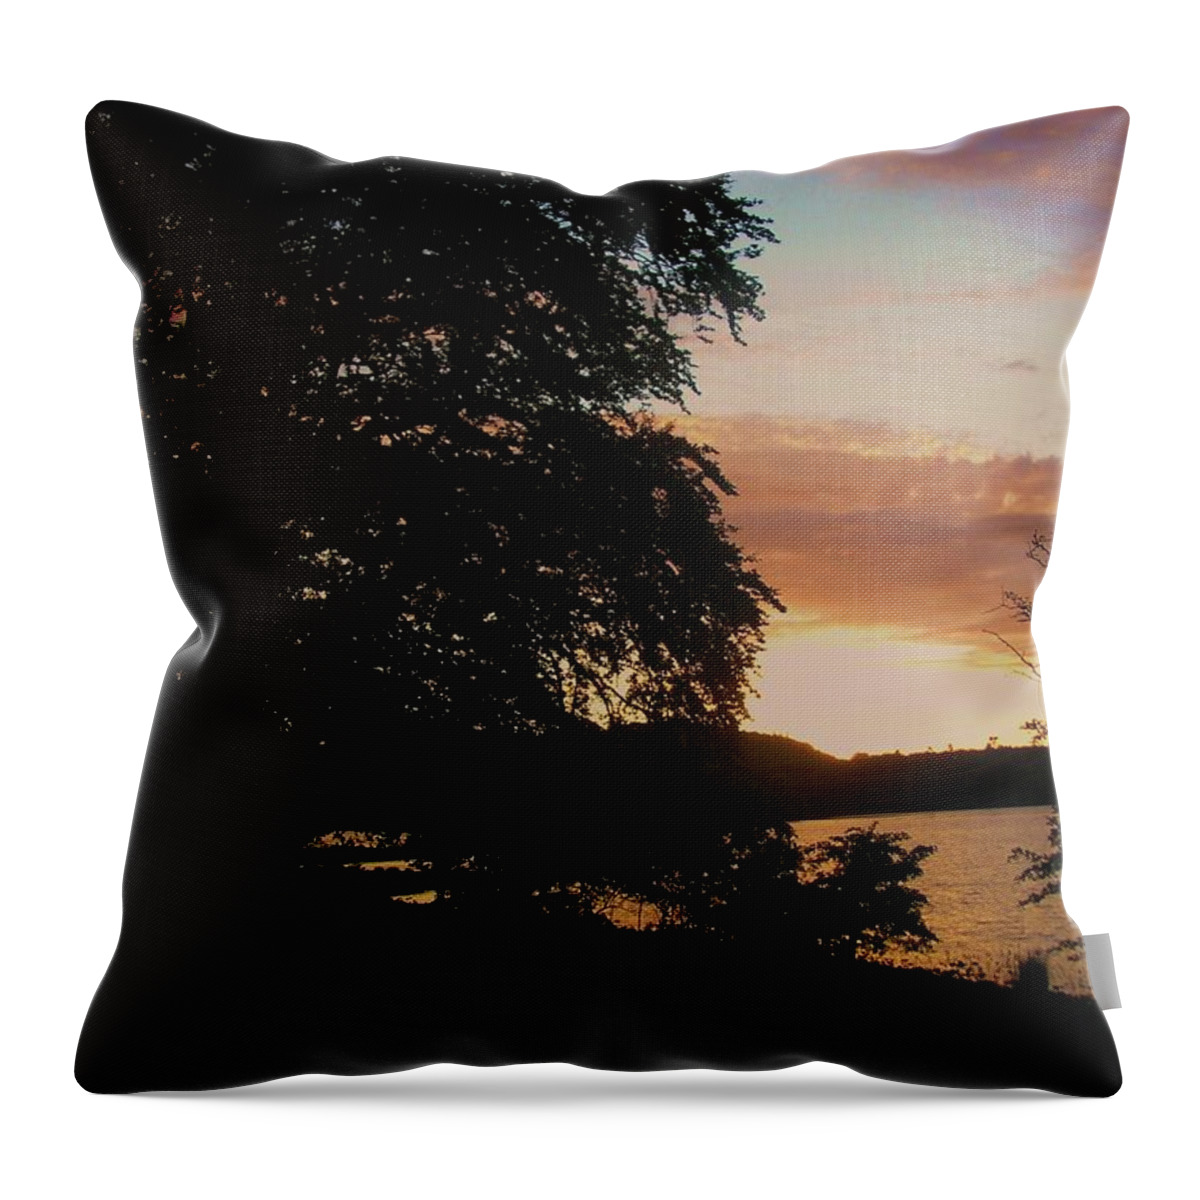 Landscape Throw Pillow featuring the photograph Lough Gill Co. Sligo Ireland by Louise Macarthur Art and Photography